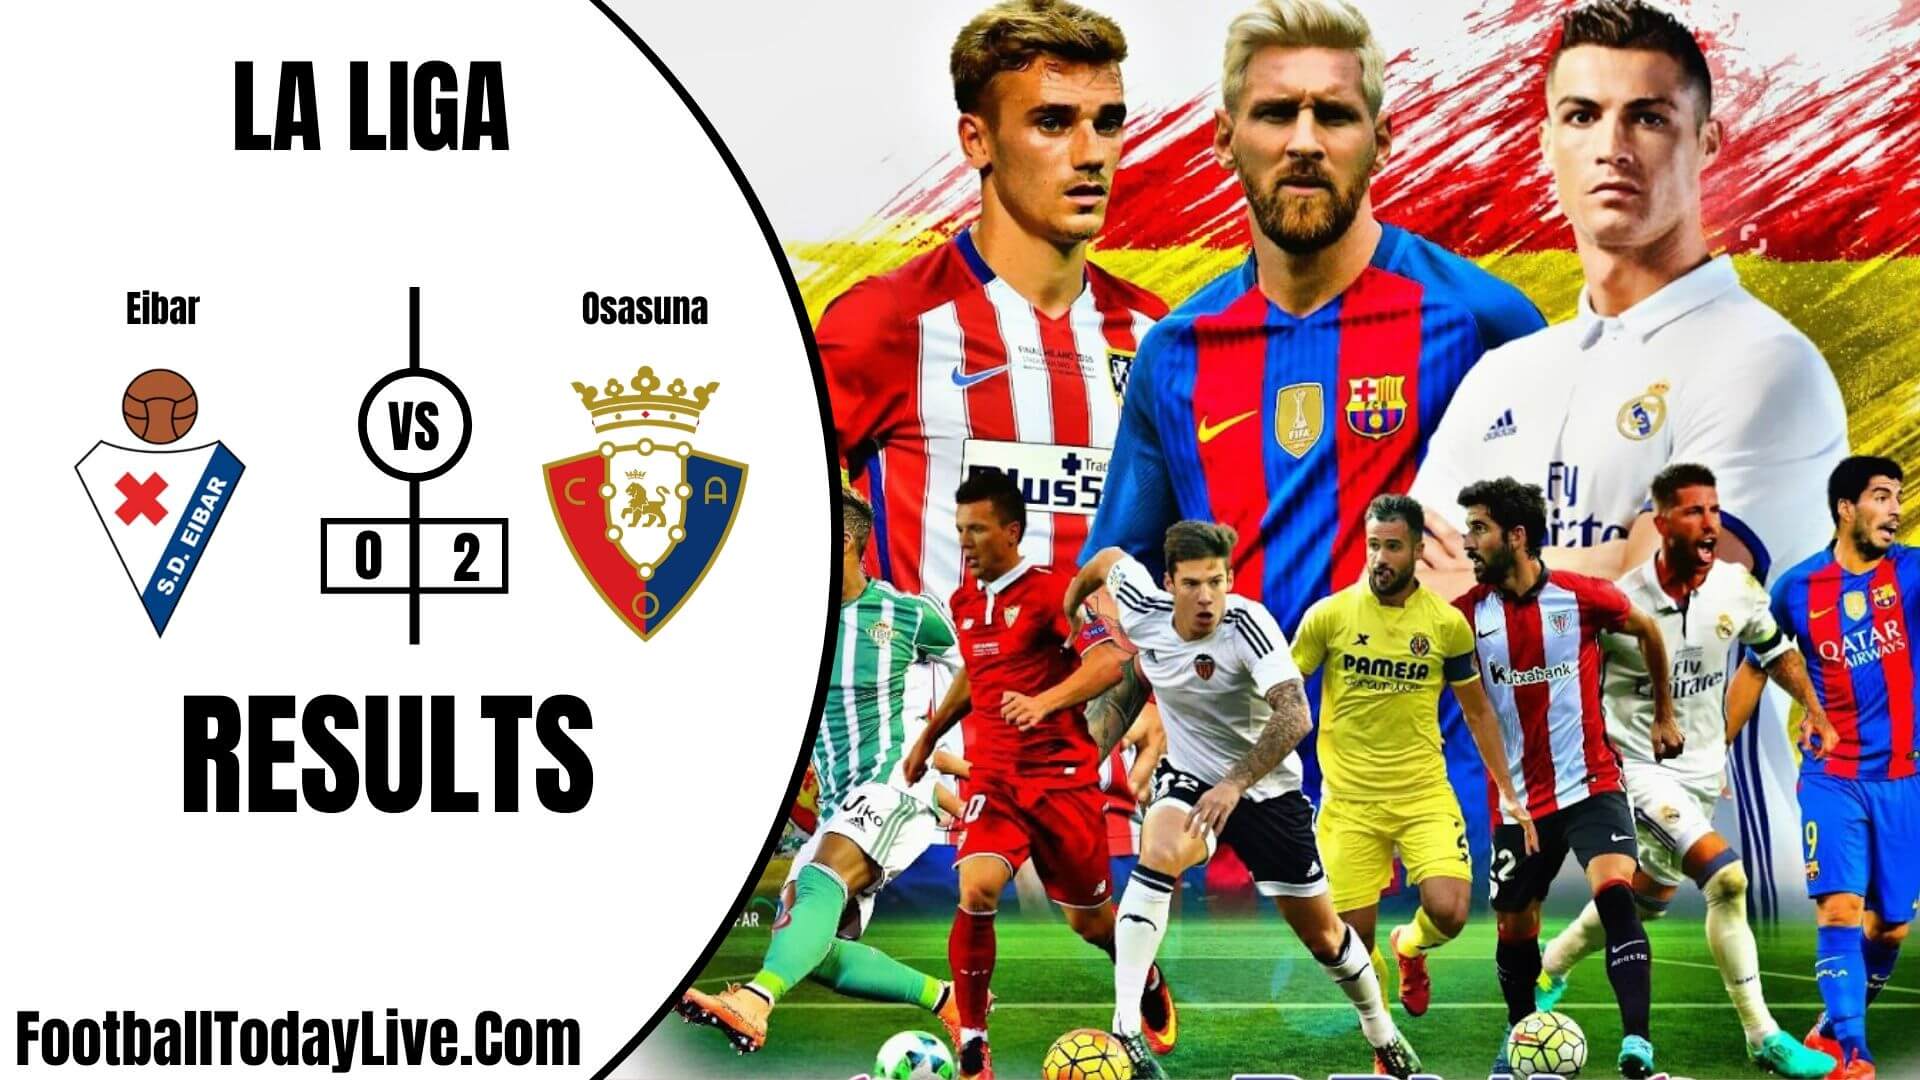 Eibar Vs Osasuna | La Liga Week 33 Result 2020